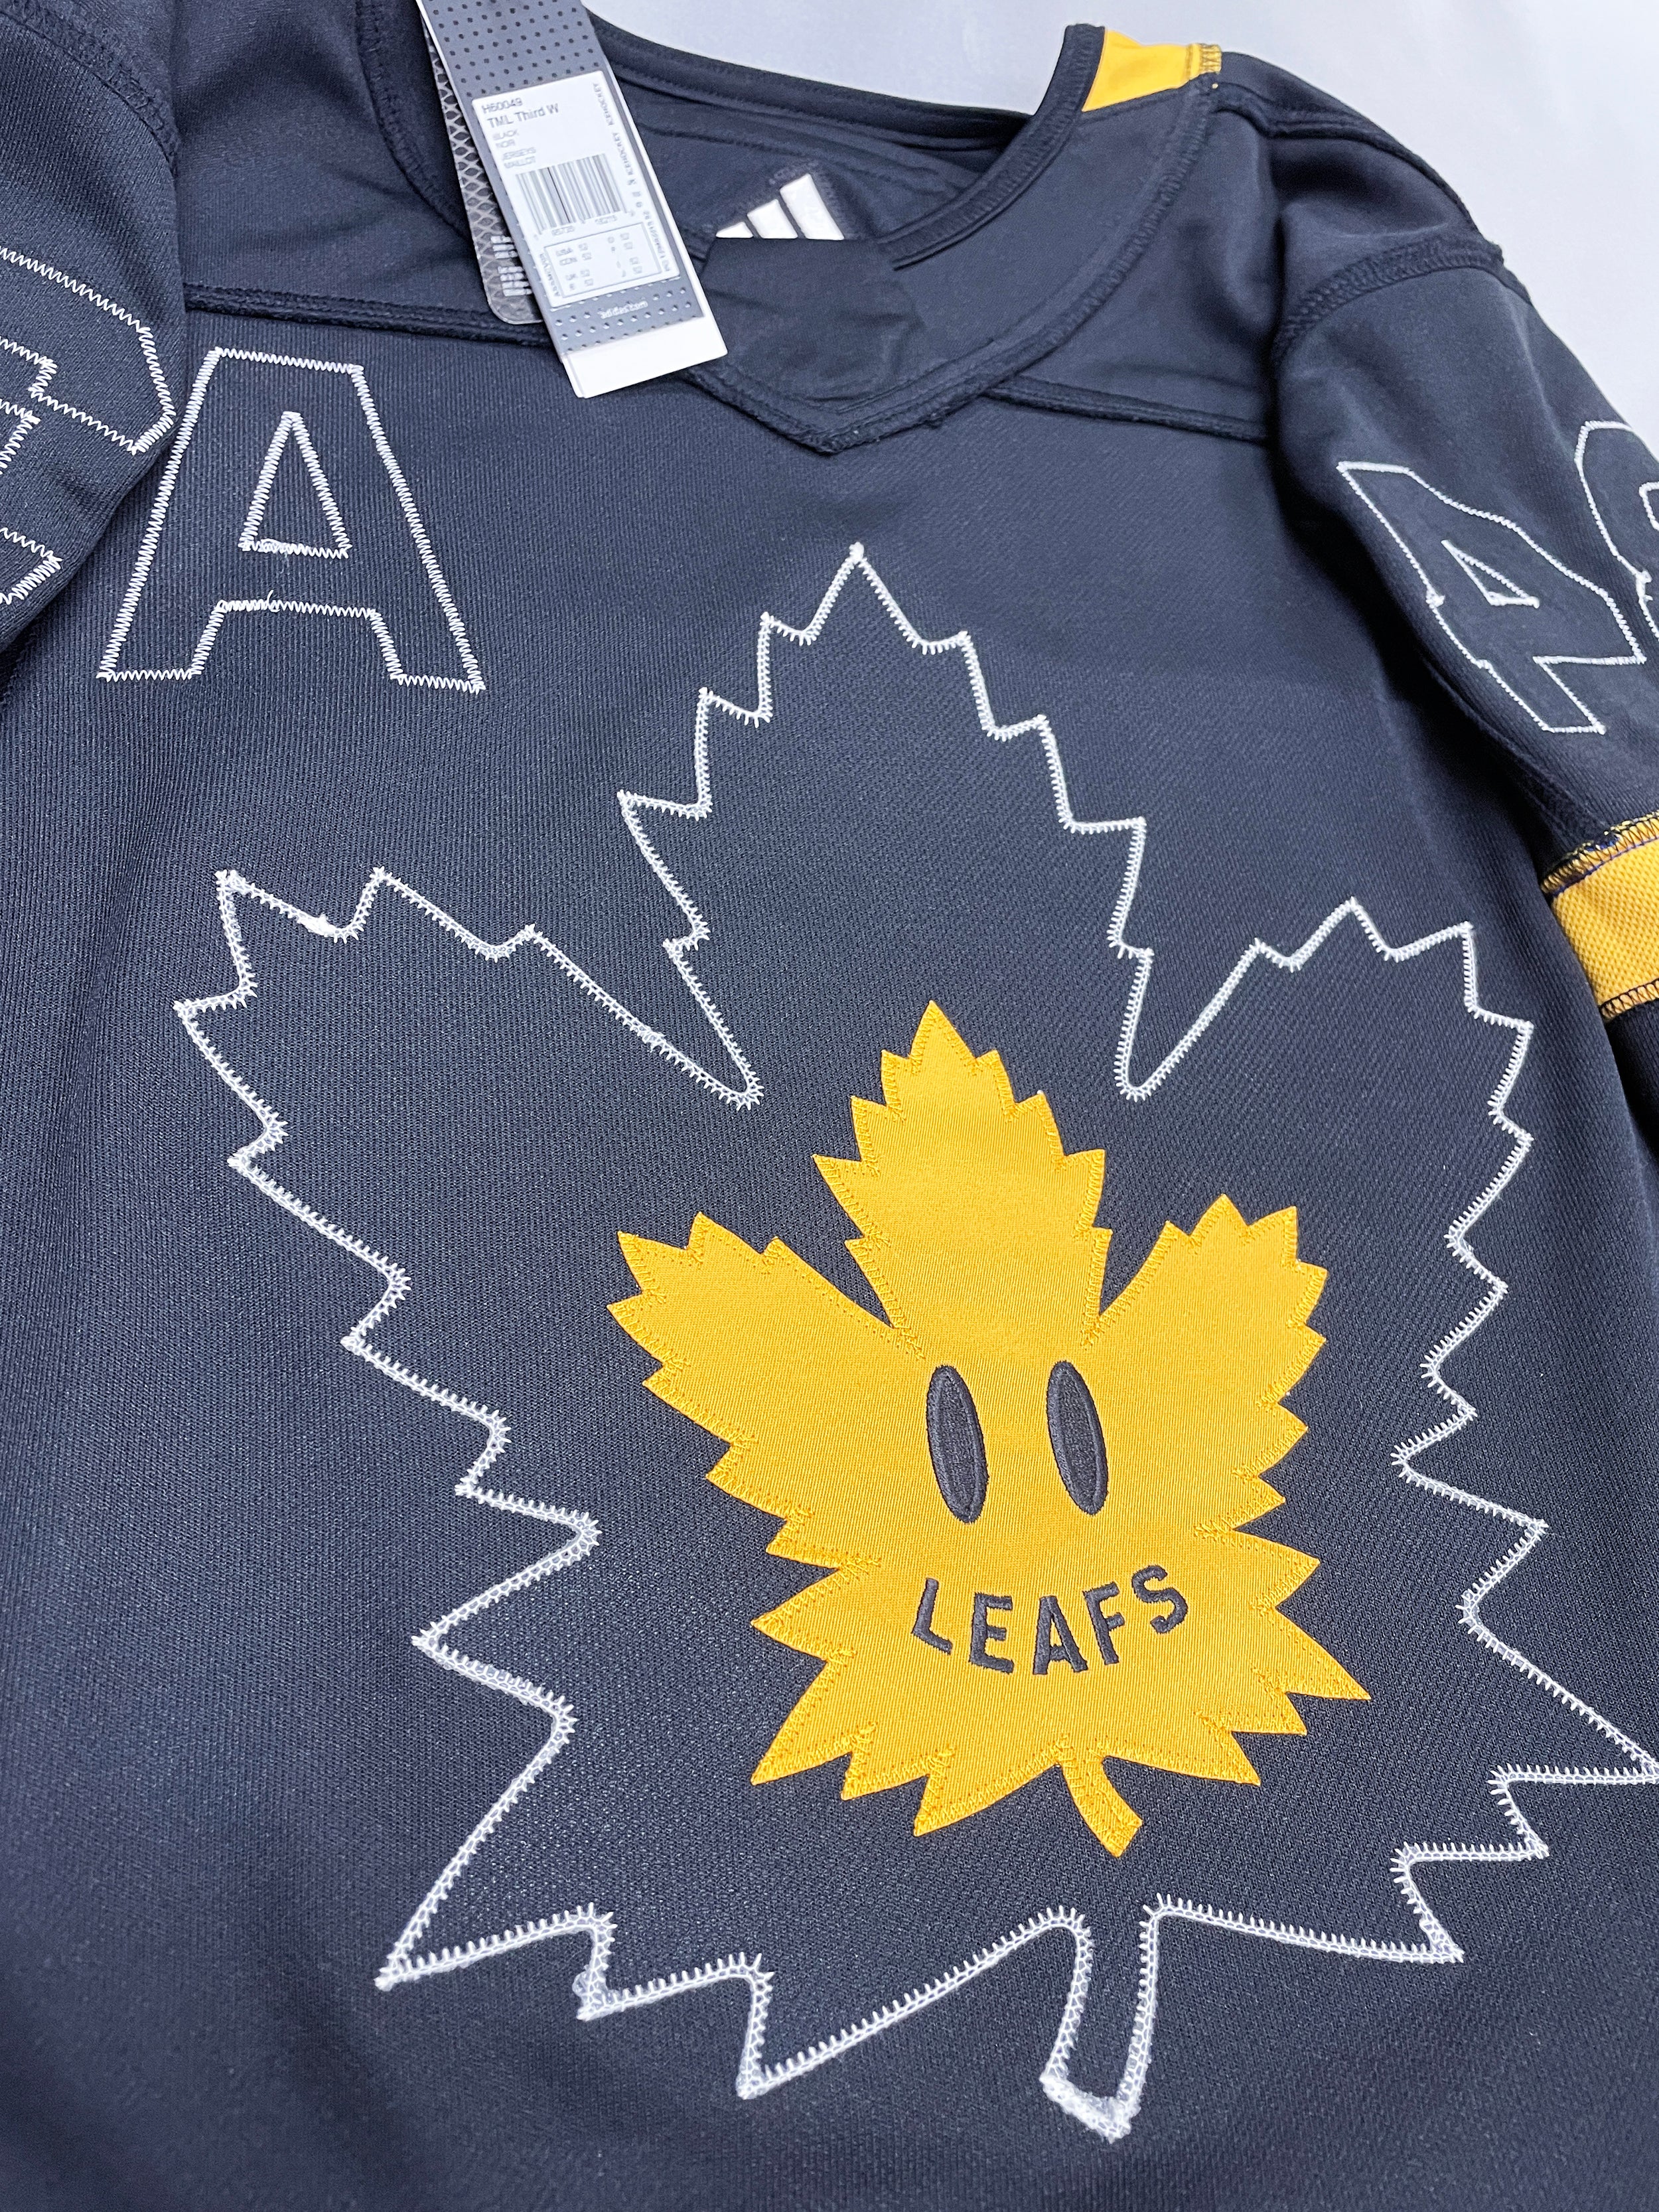 Mitch Marner Toronto Maple Leafs Adidas Primegreen Authentic NHL Hockey Jersey - Third Alternate / S/46